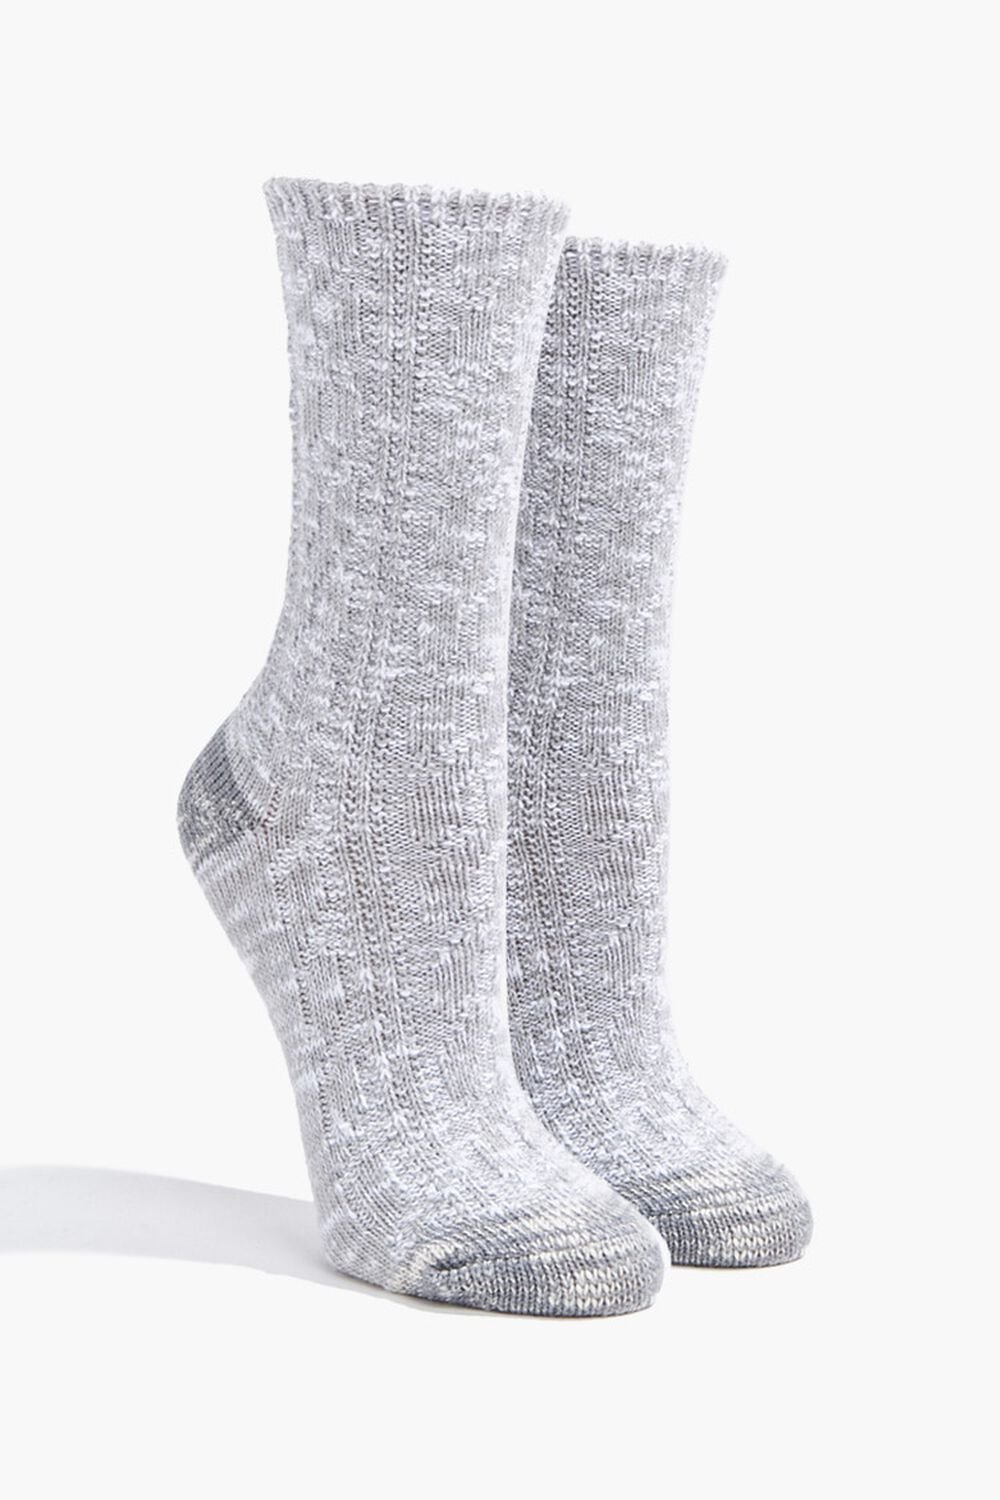 Marled Knit Crew Socks, image 1